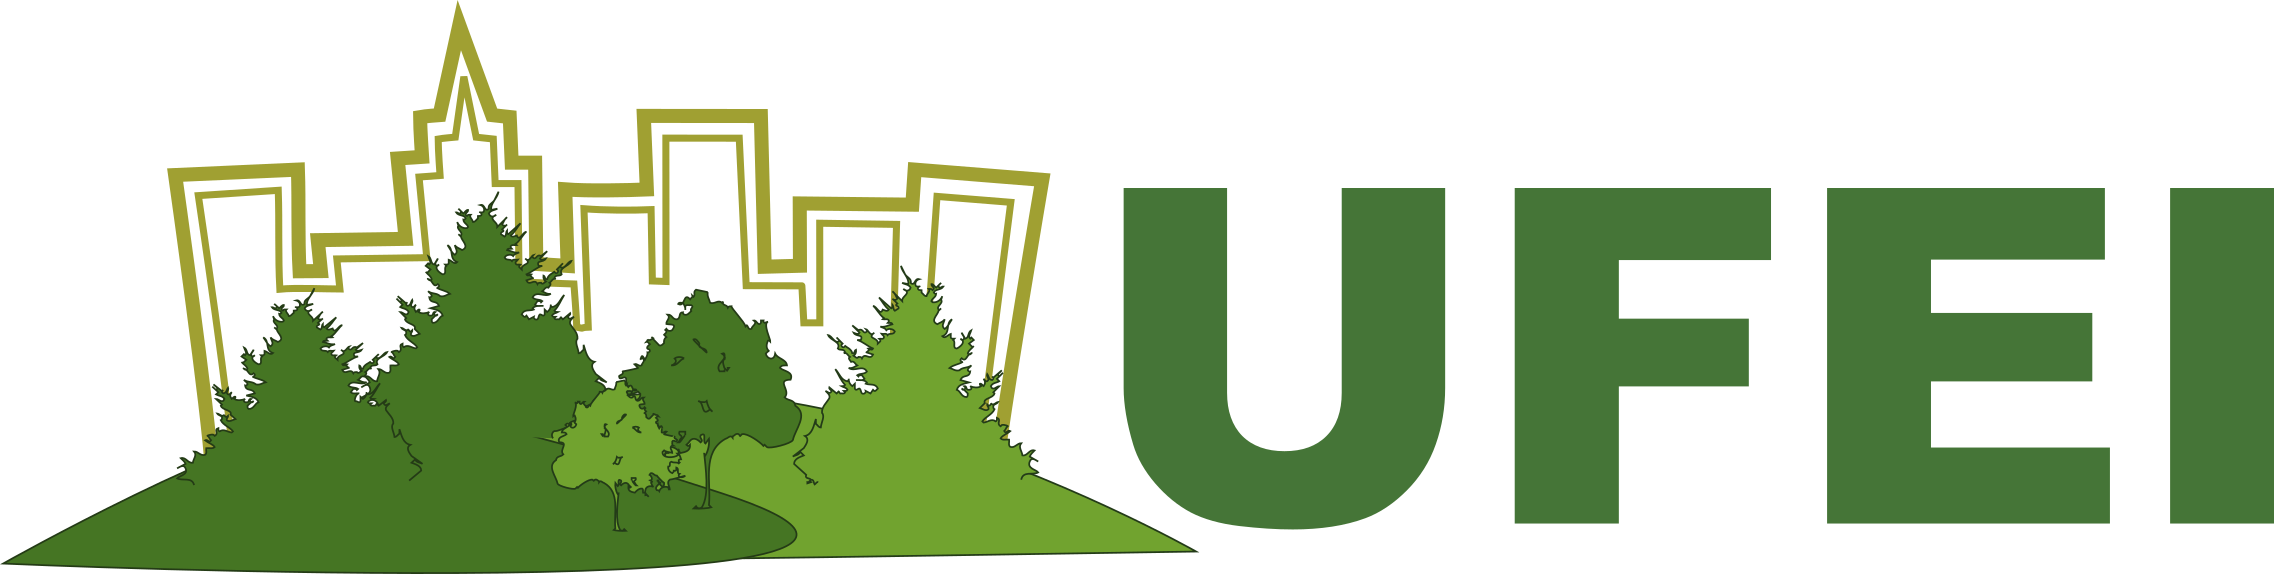 Urban Forest Ecosystems Institute